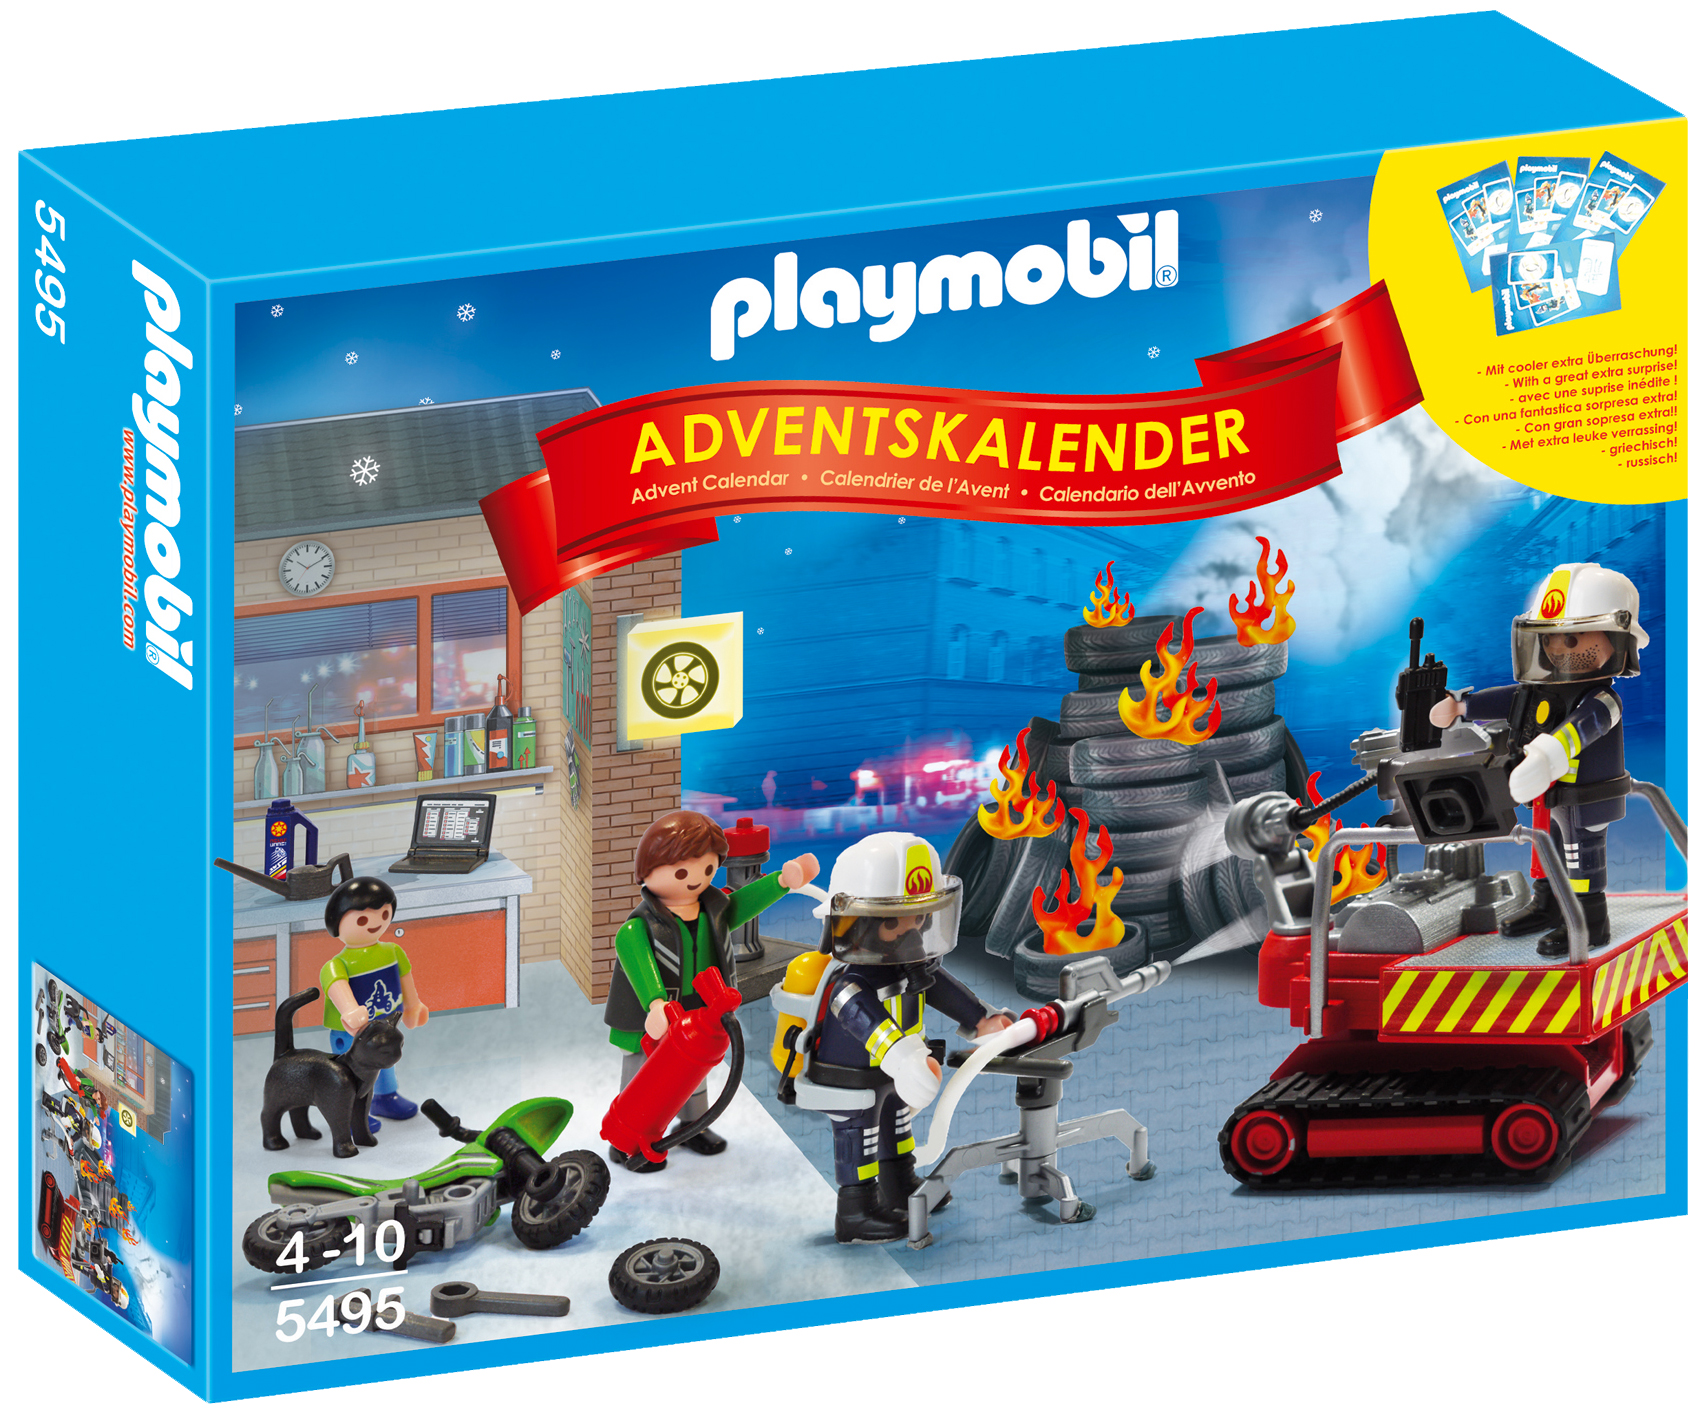 Playmobil Christmas 5495 pas cher, Calendrier de l'Avent Brigade de pompiers